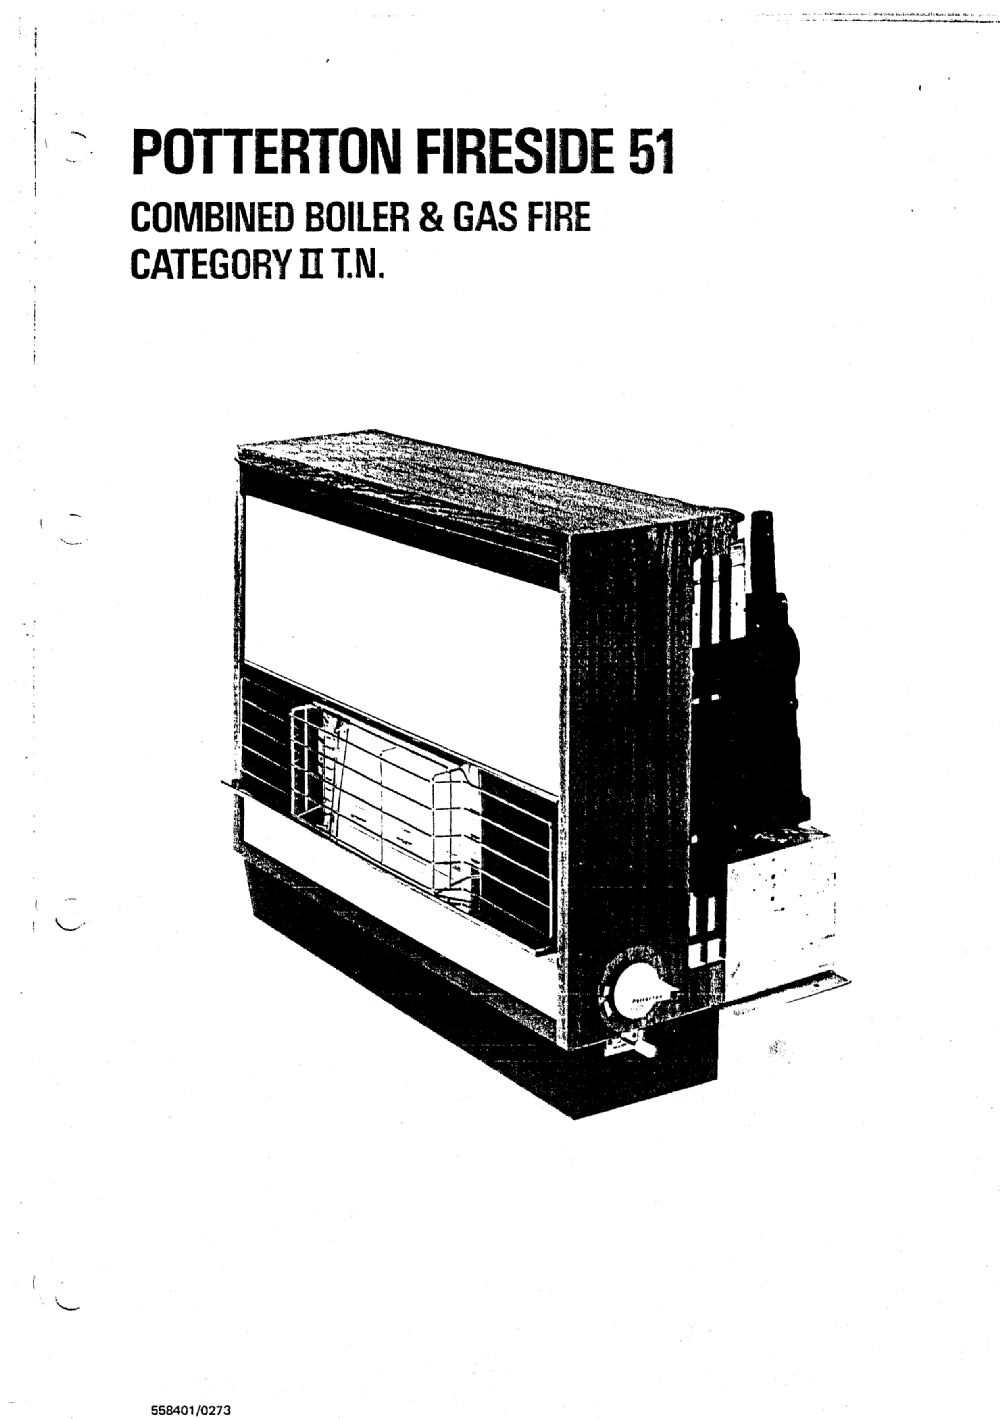 Fireside 51 (Improved) Ng Type 3 /Vernitron - appliance_4220